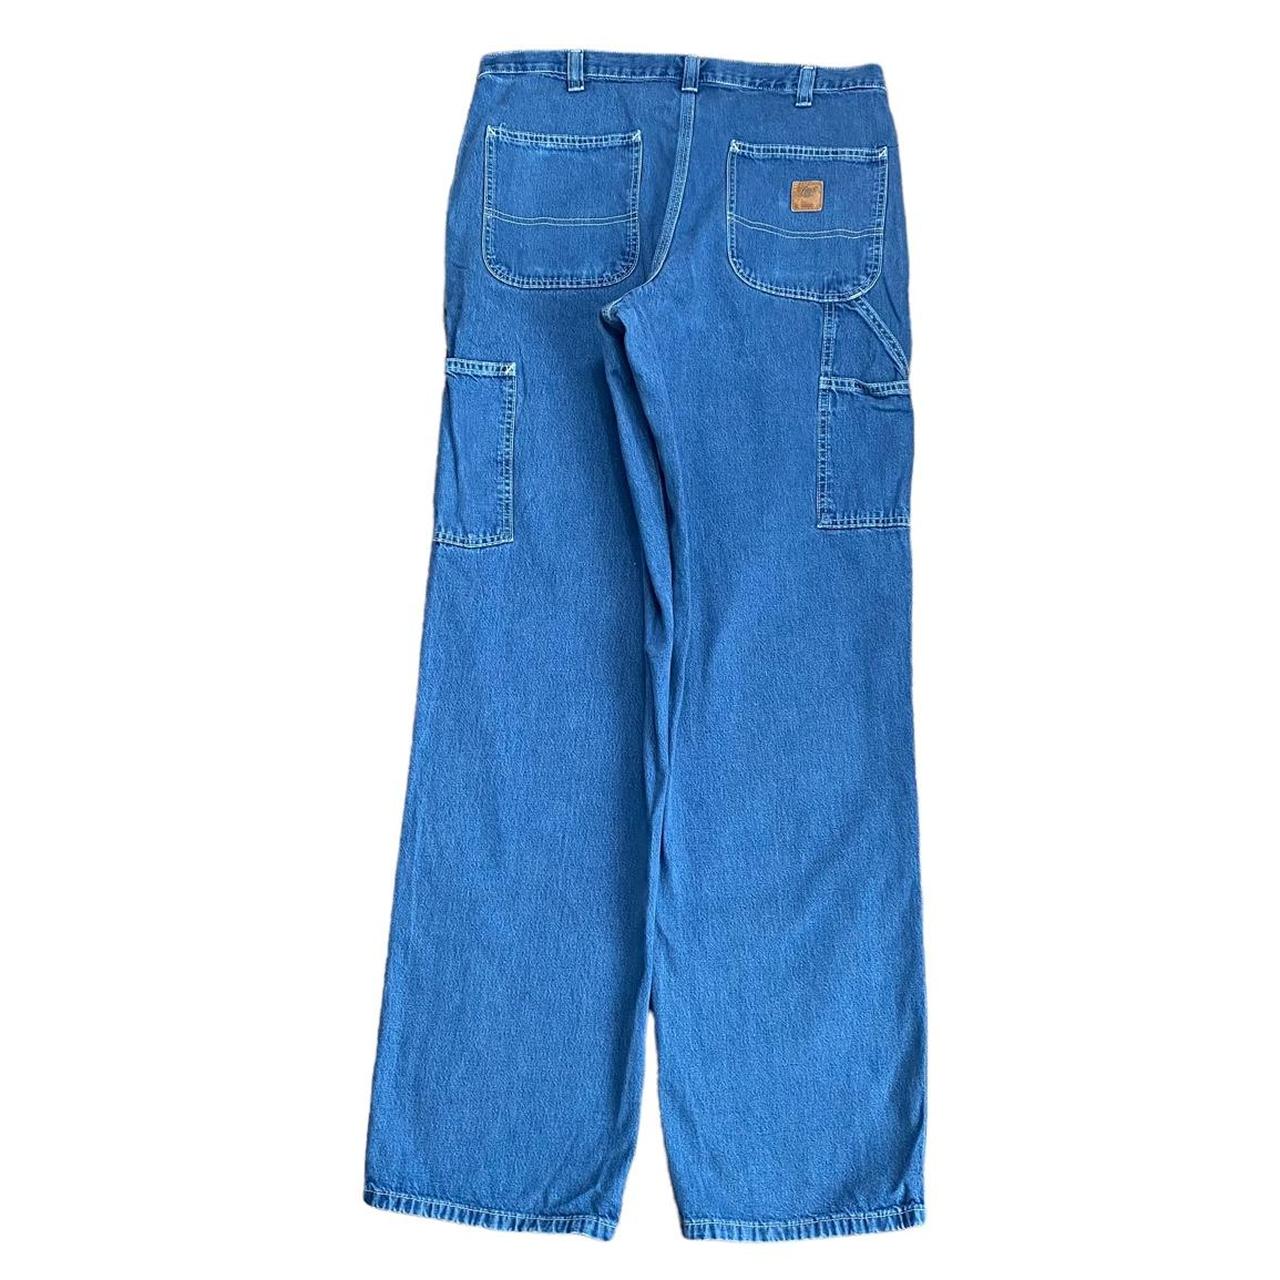 Carhartt blue carpenter jeans. Dungaree fit - baggy... - Depop